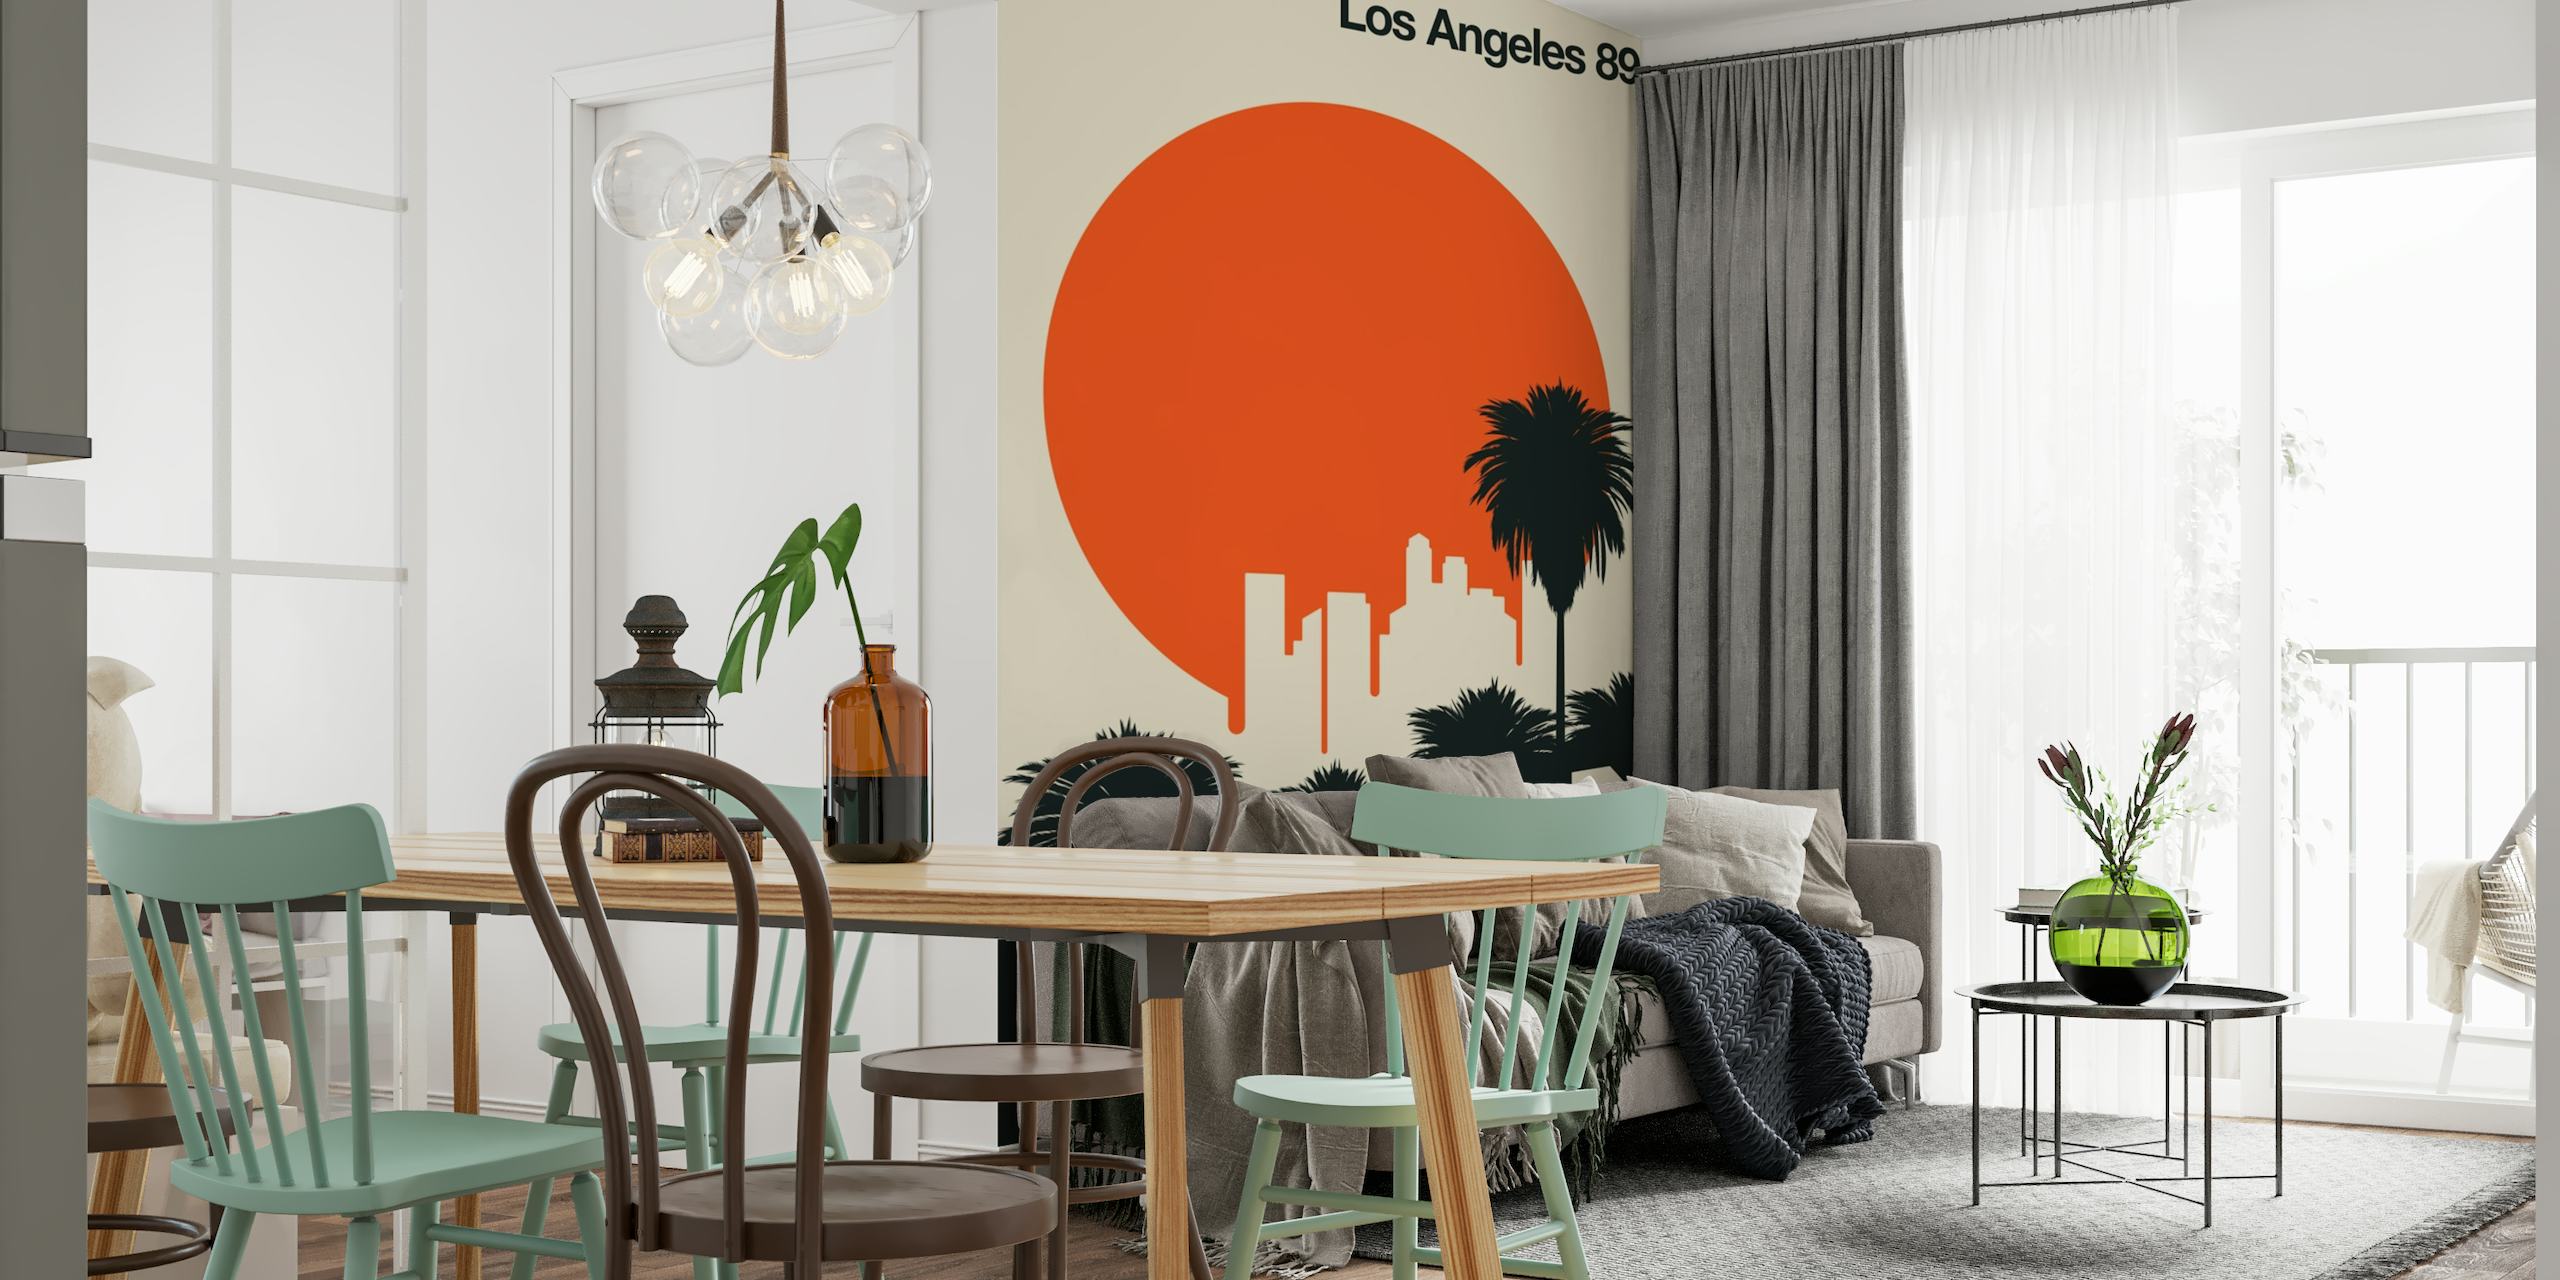 Los Angeles 89 wallpaper